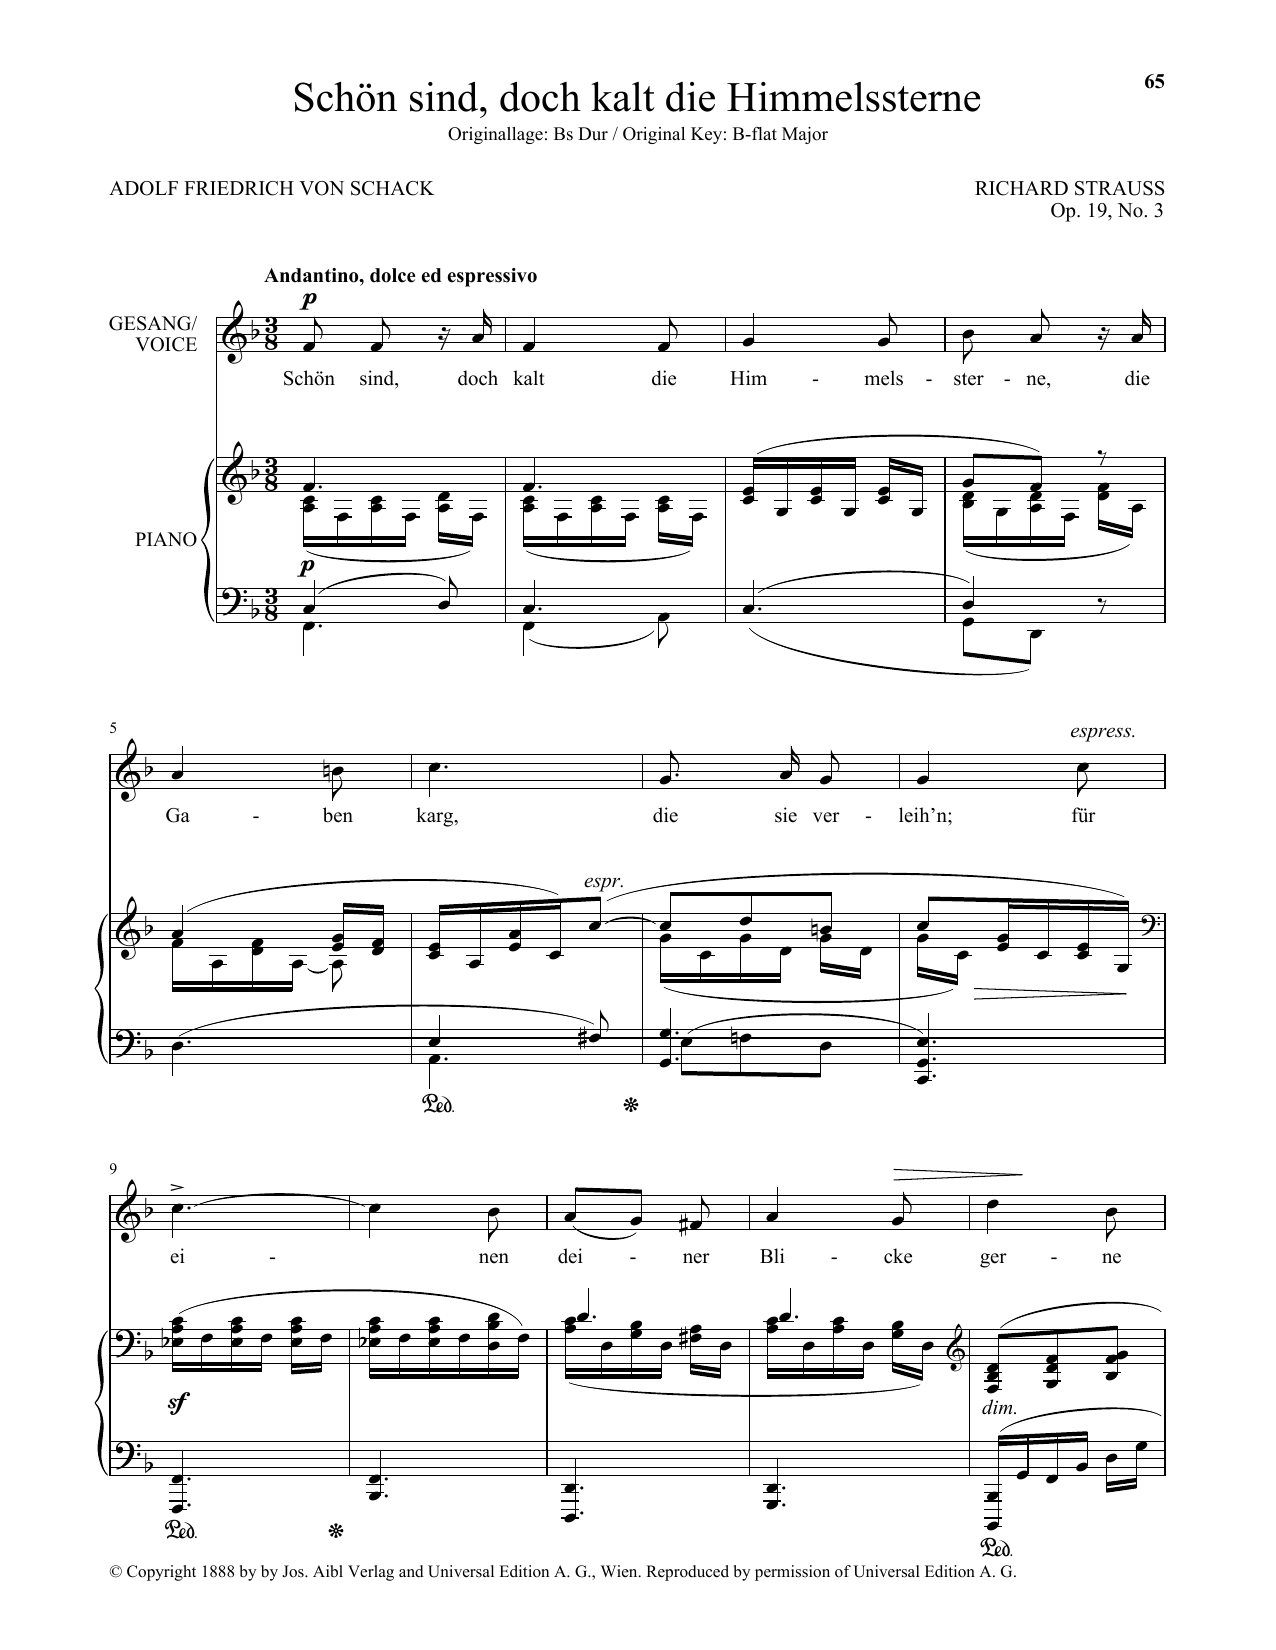 Richard Strauss Schon Sind, Doch Kalt Die Himmelssterne (Low Voice) Sheet Music Notes & Chords for Piano & Vocal - Download or Print PDF